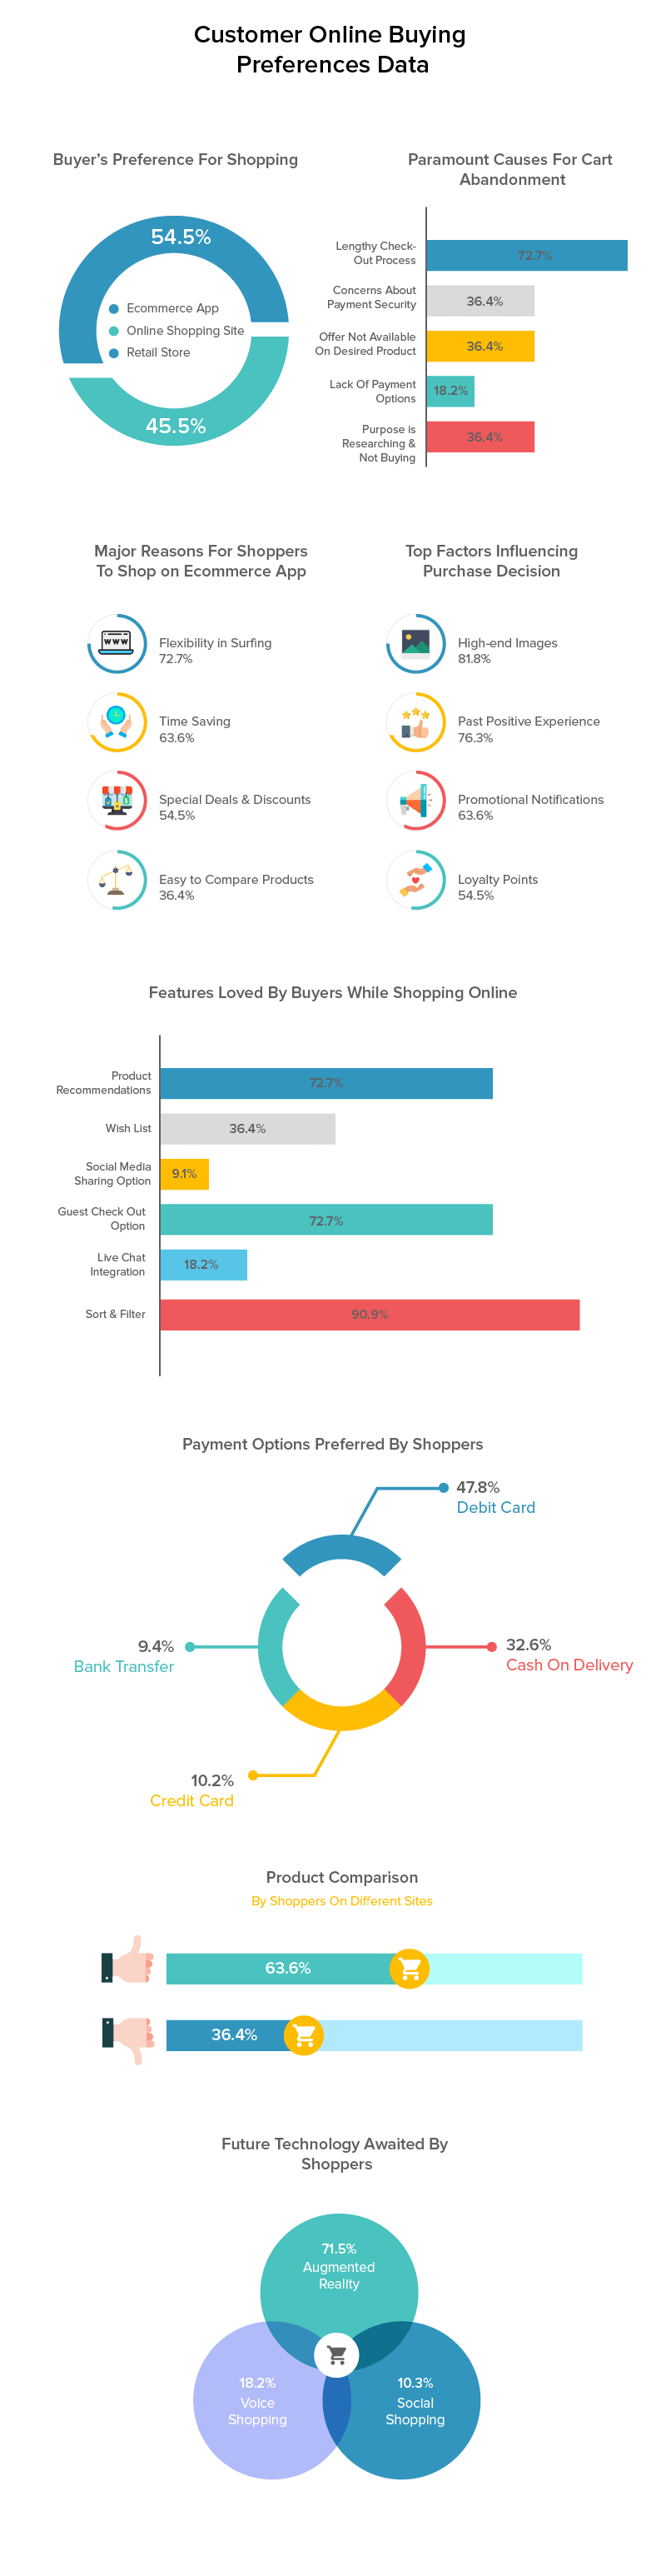 Customer Online Buying Preferences Data